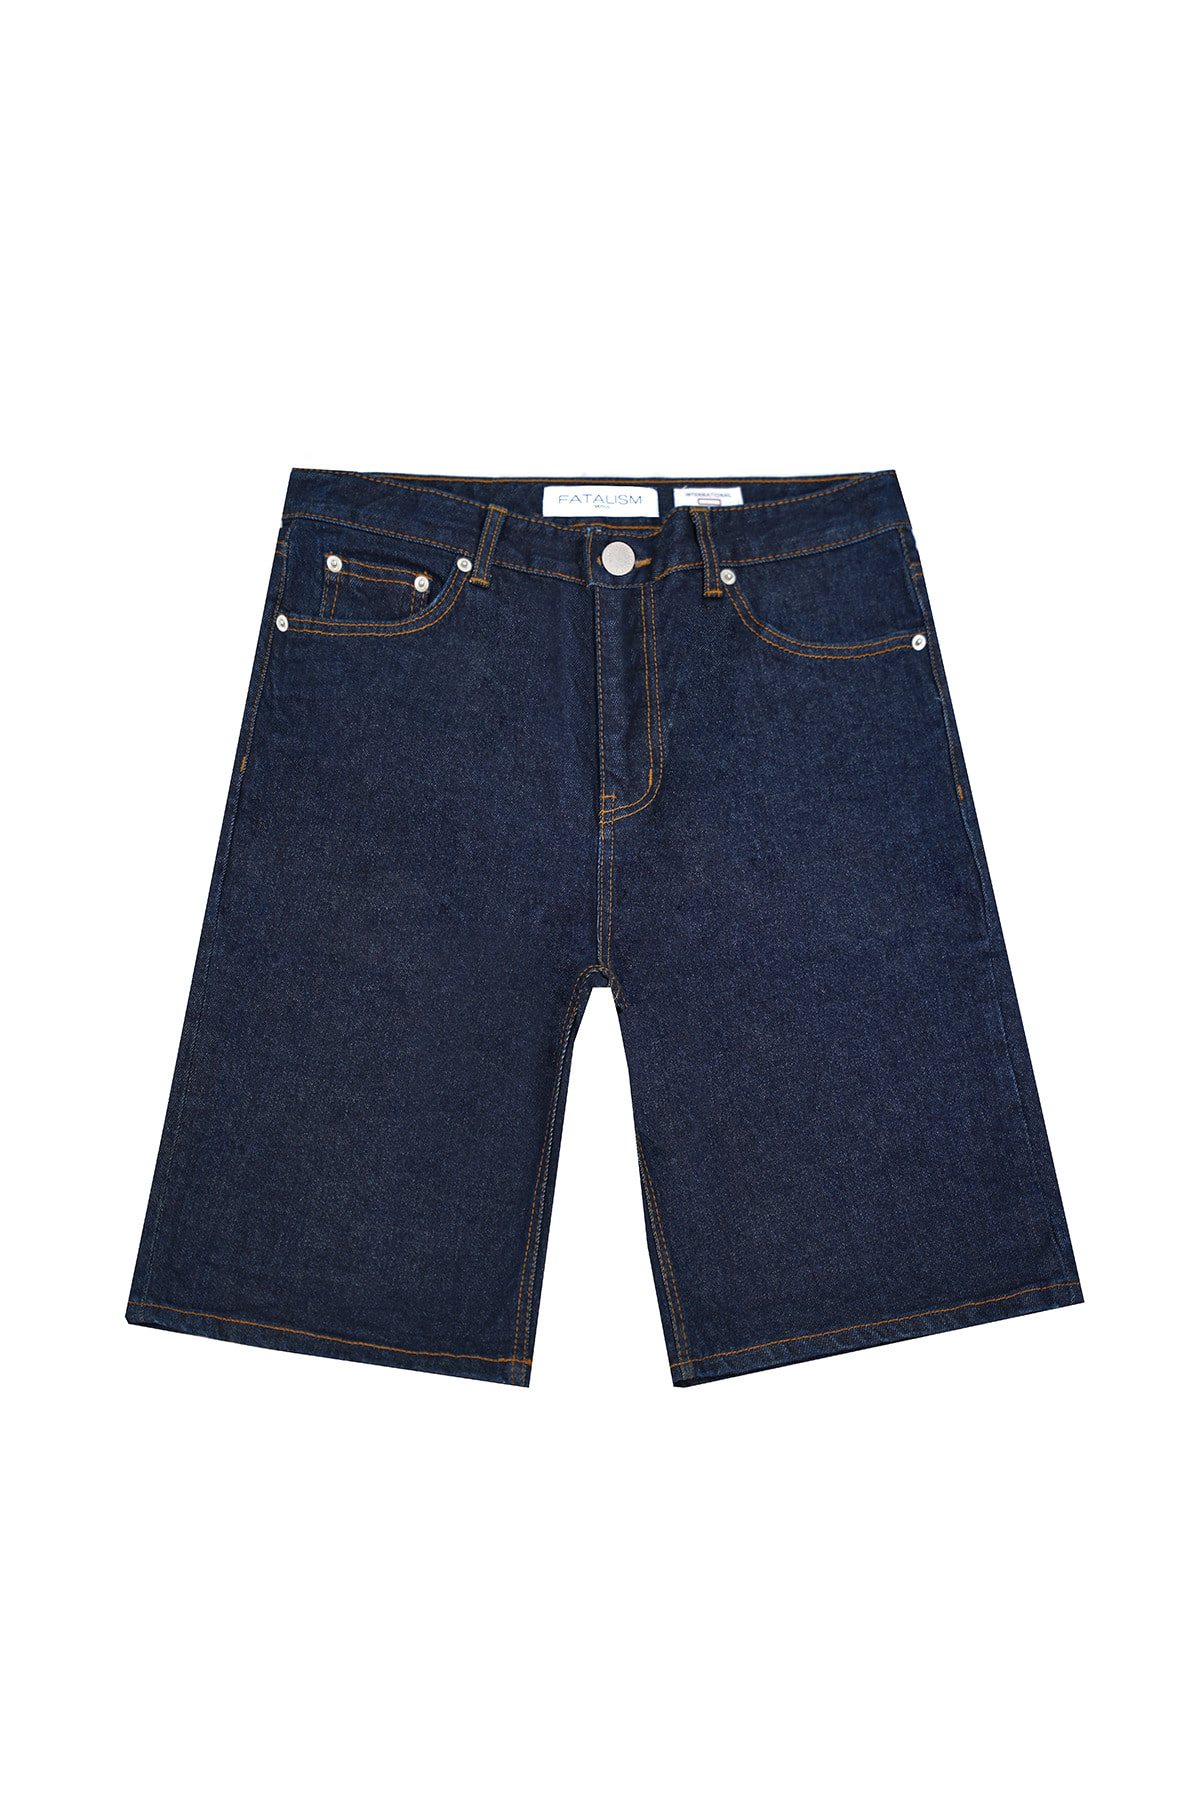 #0144 indigo standard 1/2 short pants